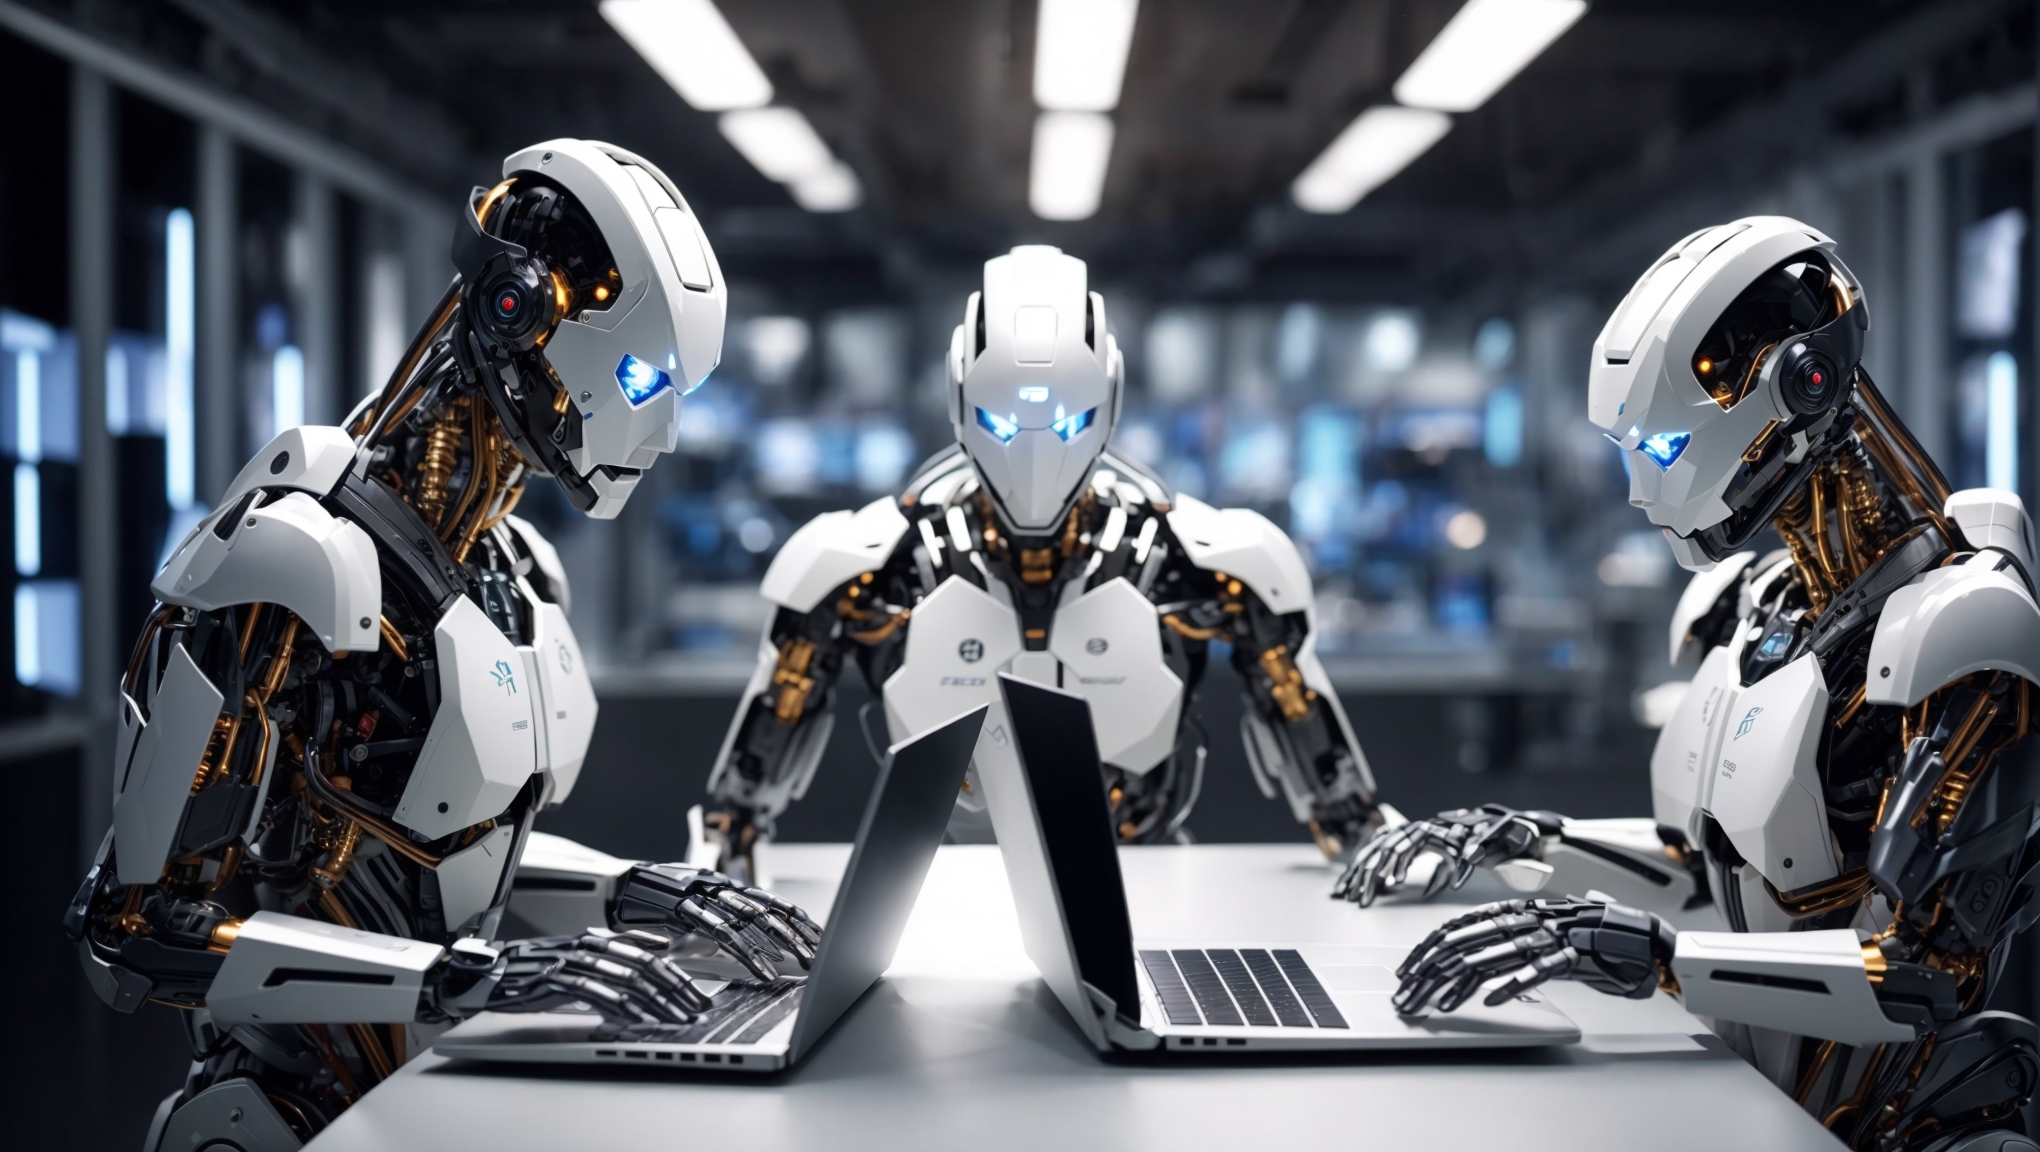 futuristic humanoid robots performing SEO work on laptops